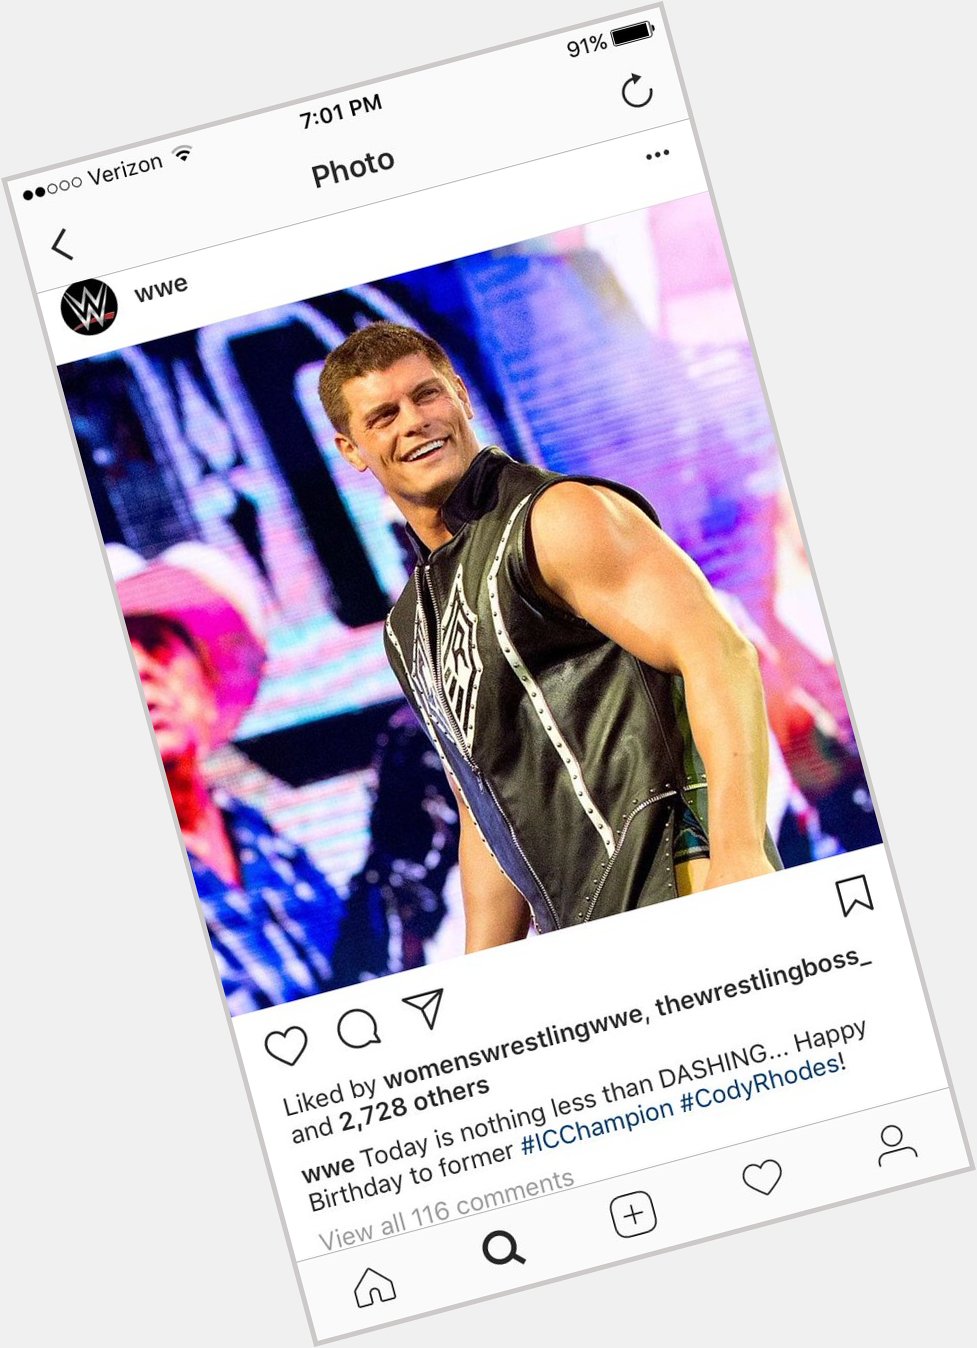 WWE wished Cody Rhodes a Happy Birthday  